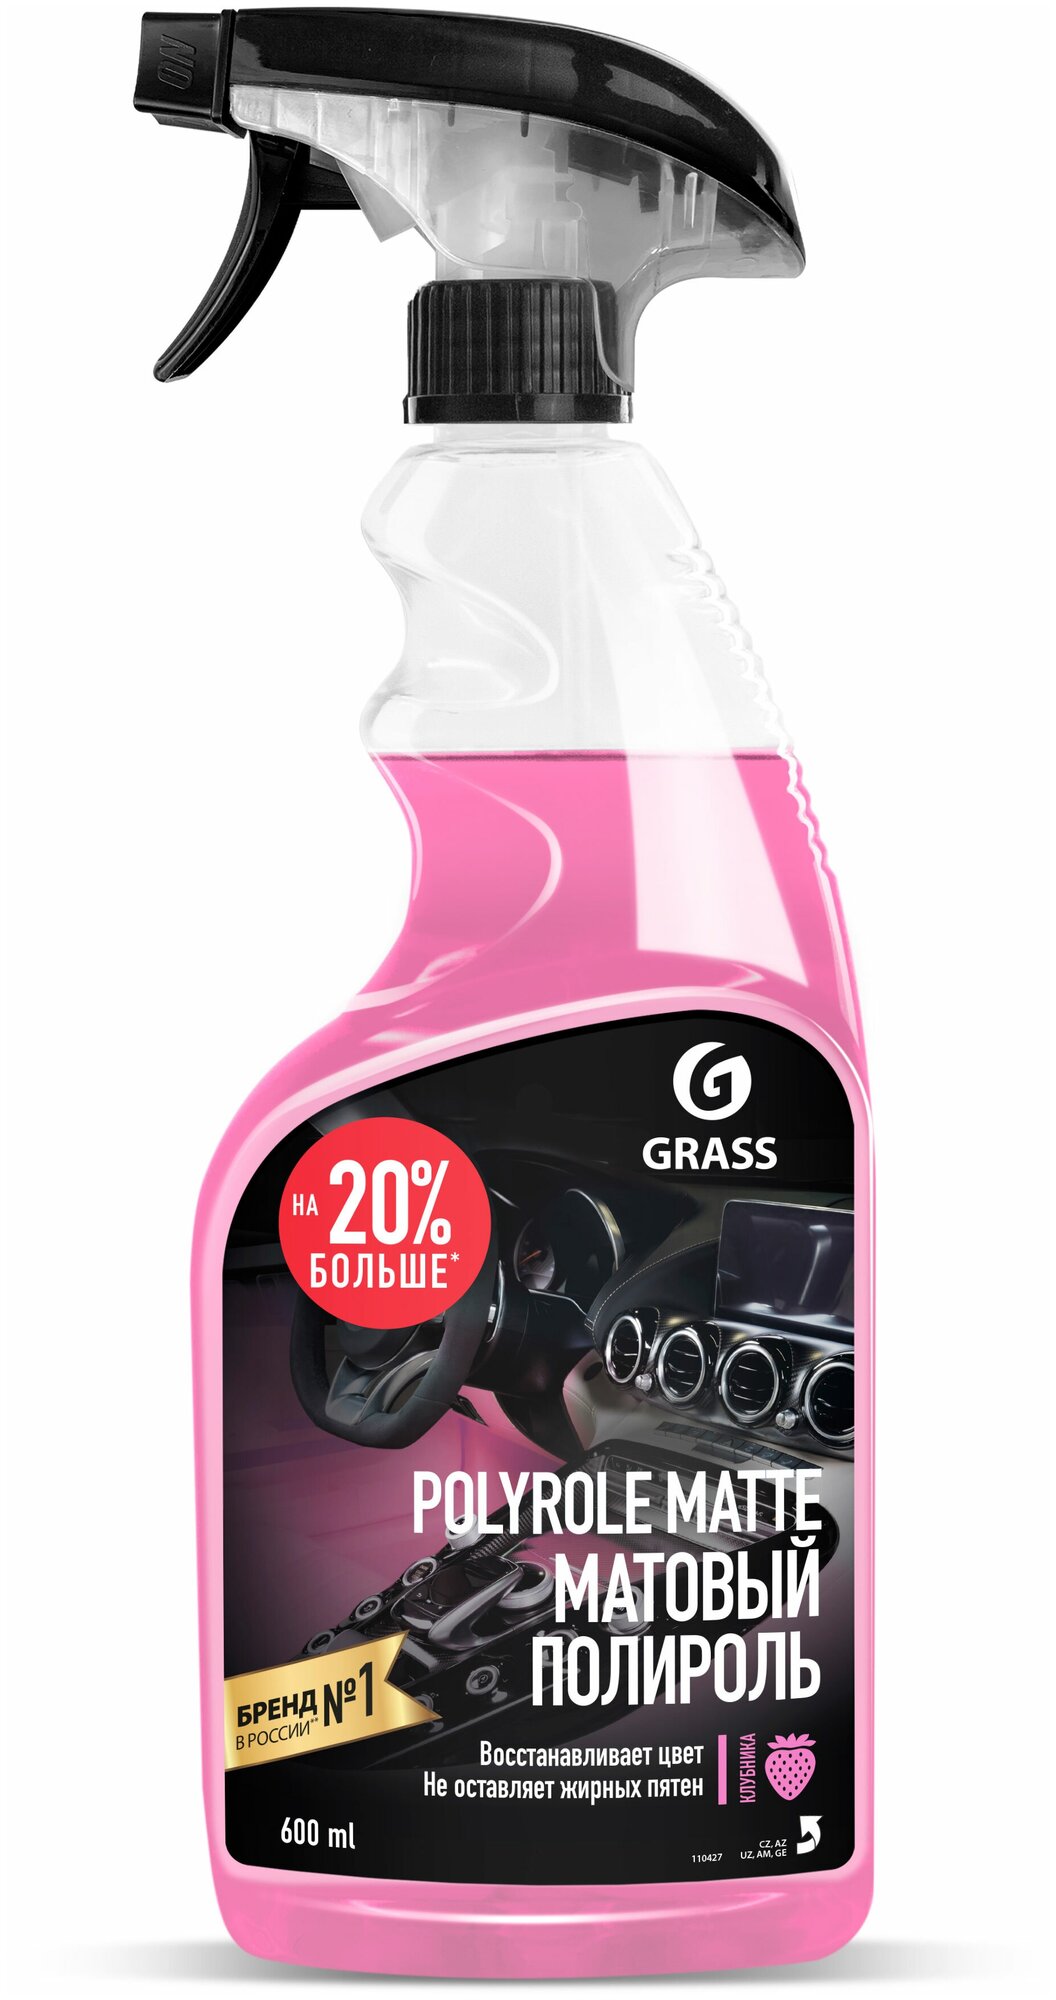 Grass Полироль-очиститель пластика Polyrole Matte (110428) bubble